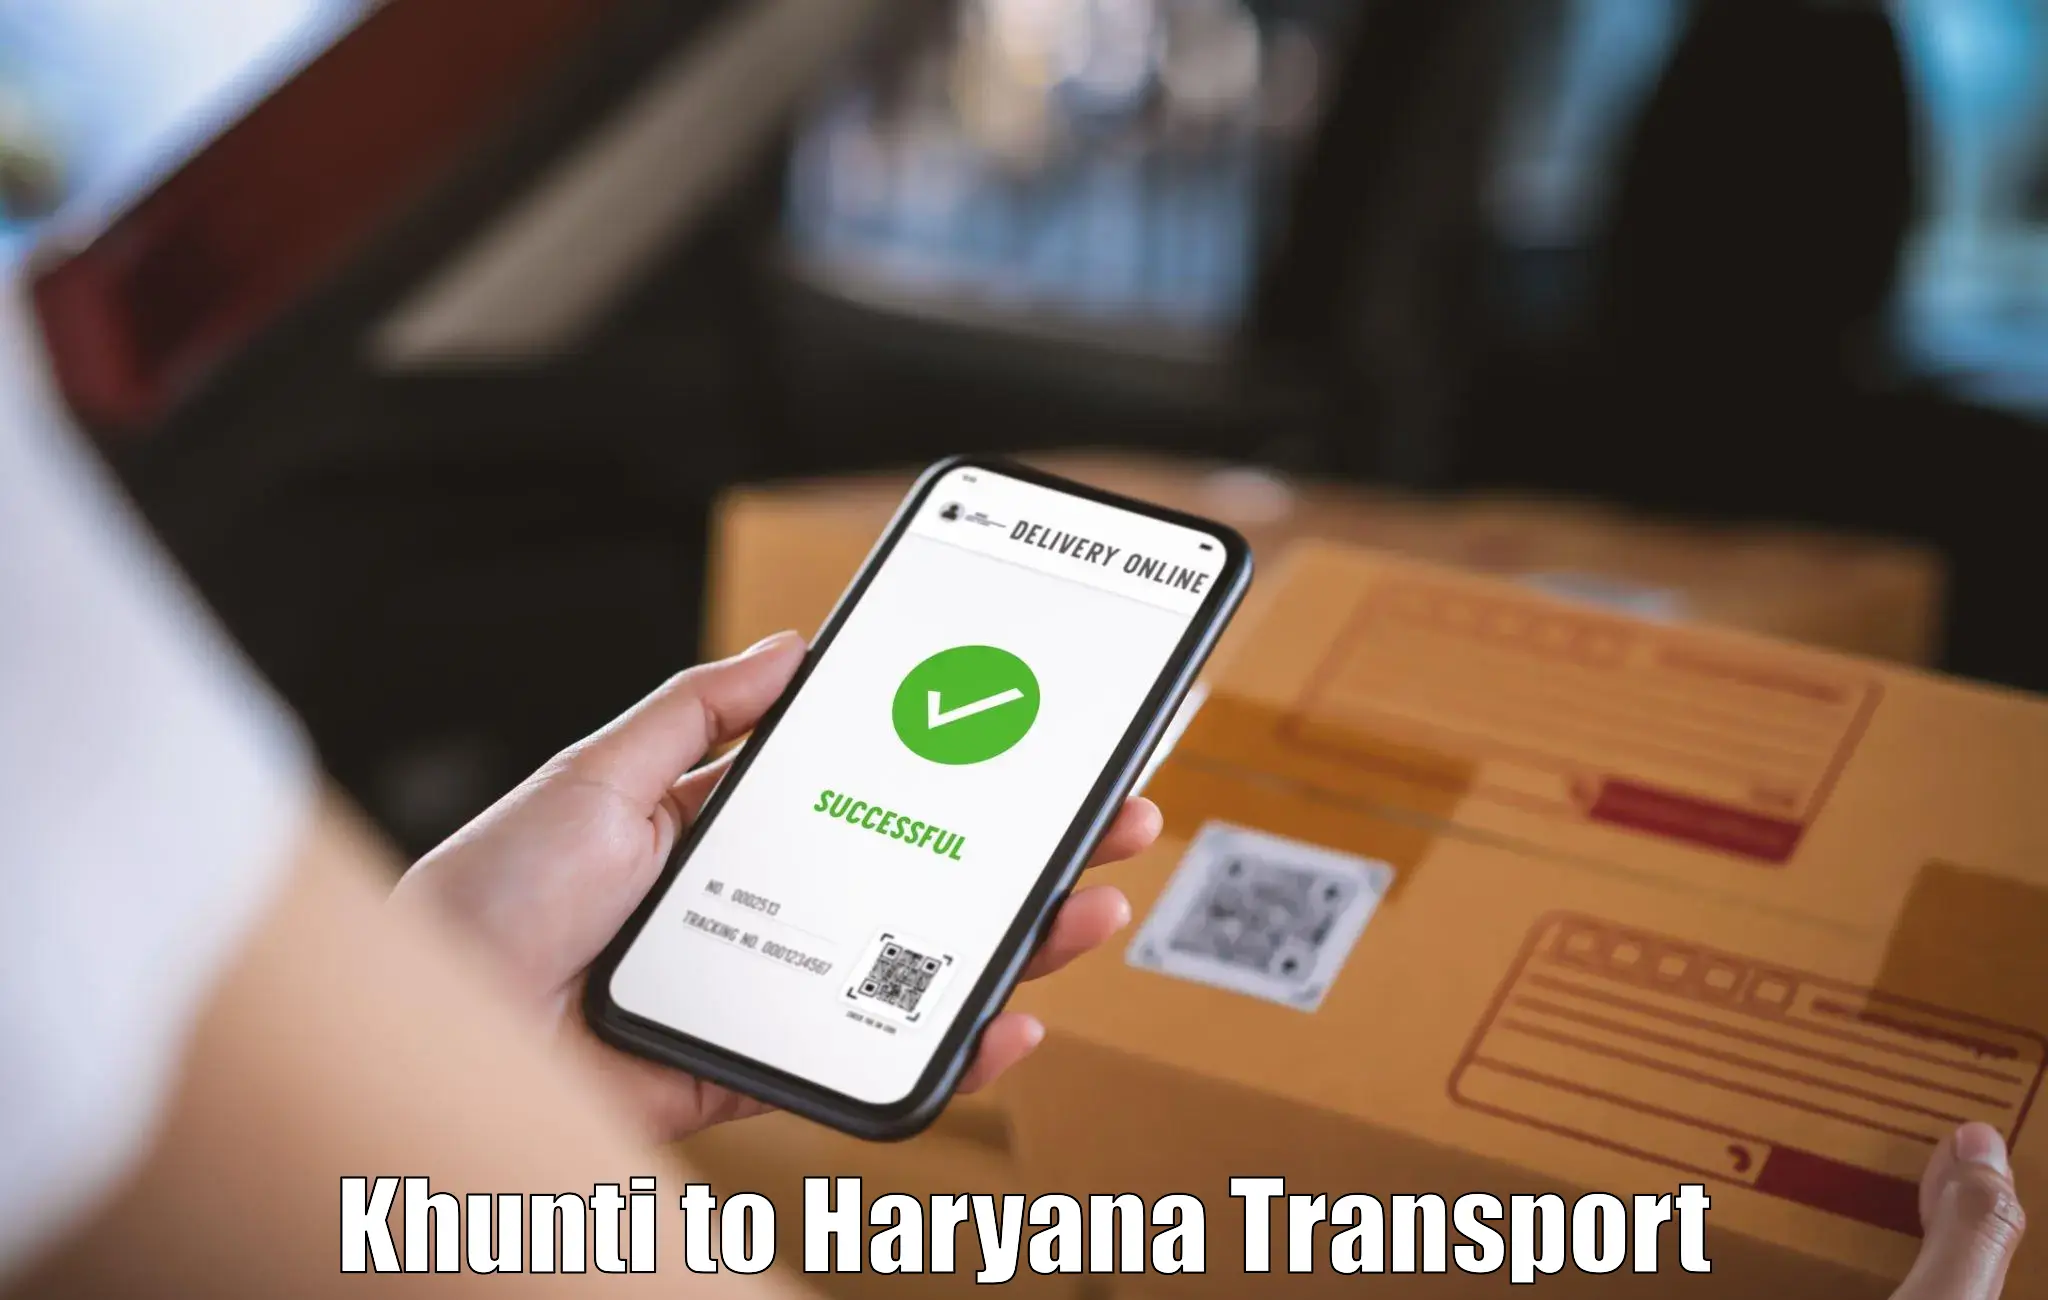 Nearby transport service Khunti to Haryana